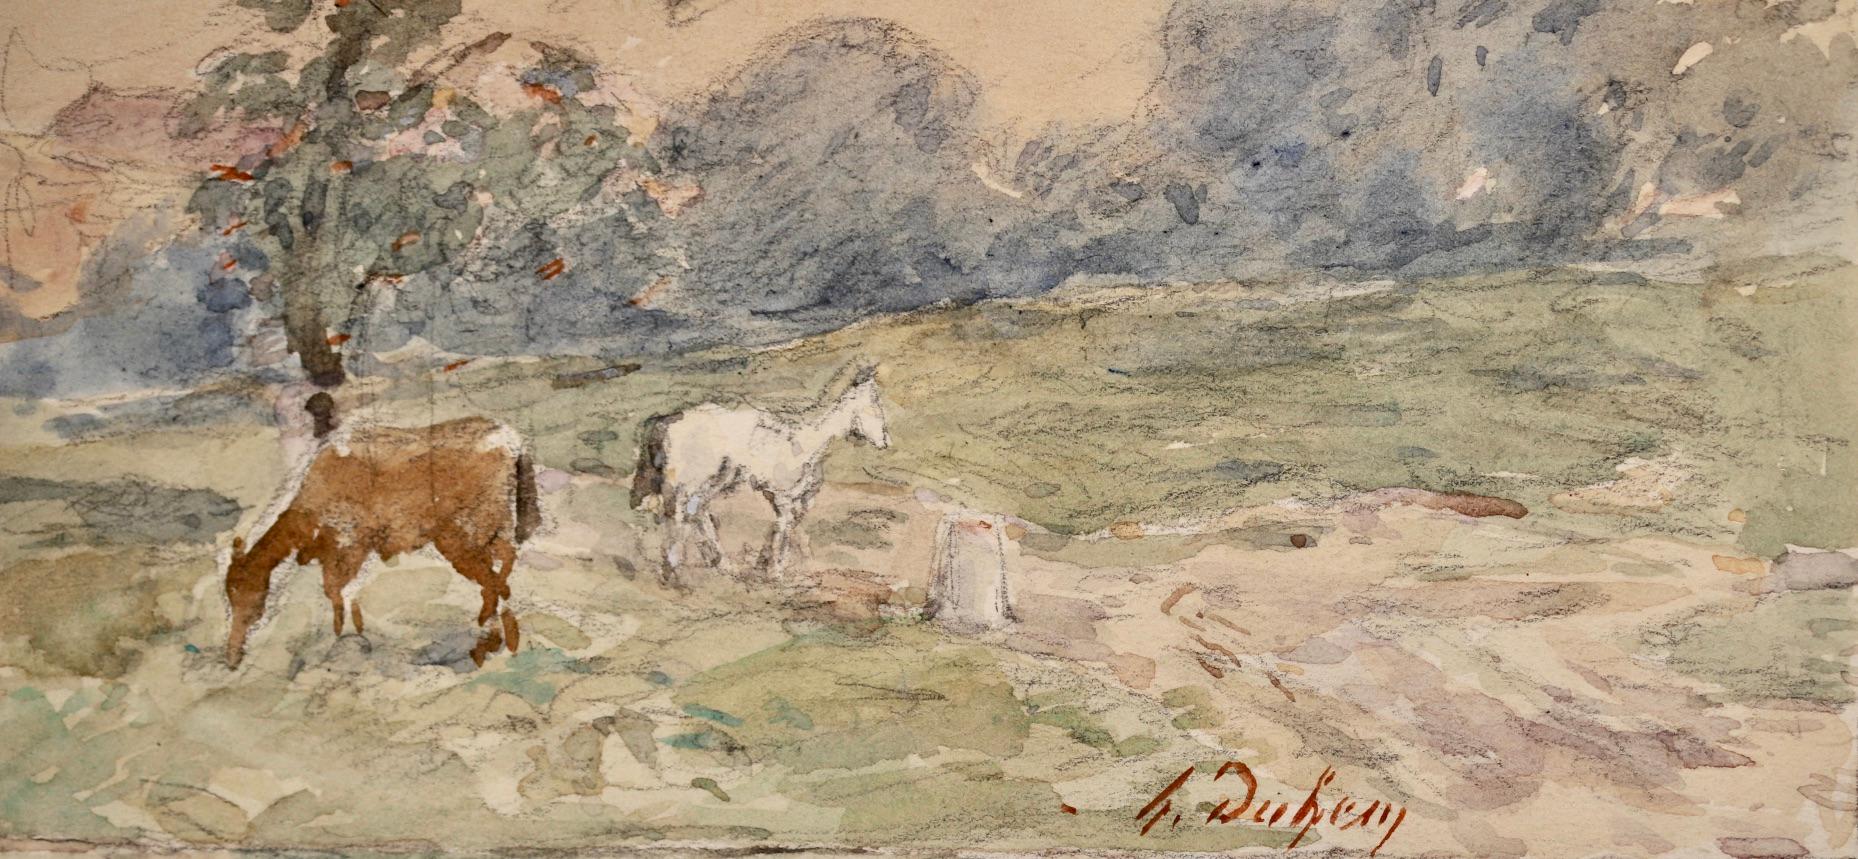 Chevaux broutant - Impressionist Watercolor, Horses in Landscape by Henri Duhem 1